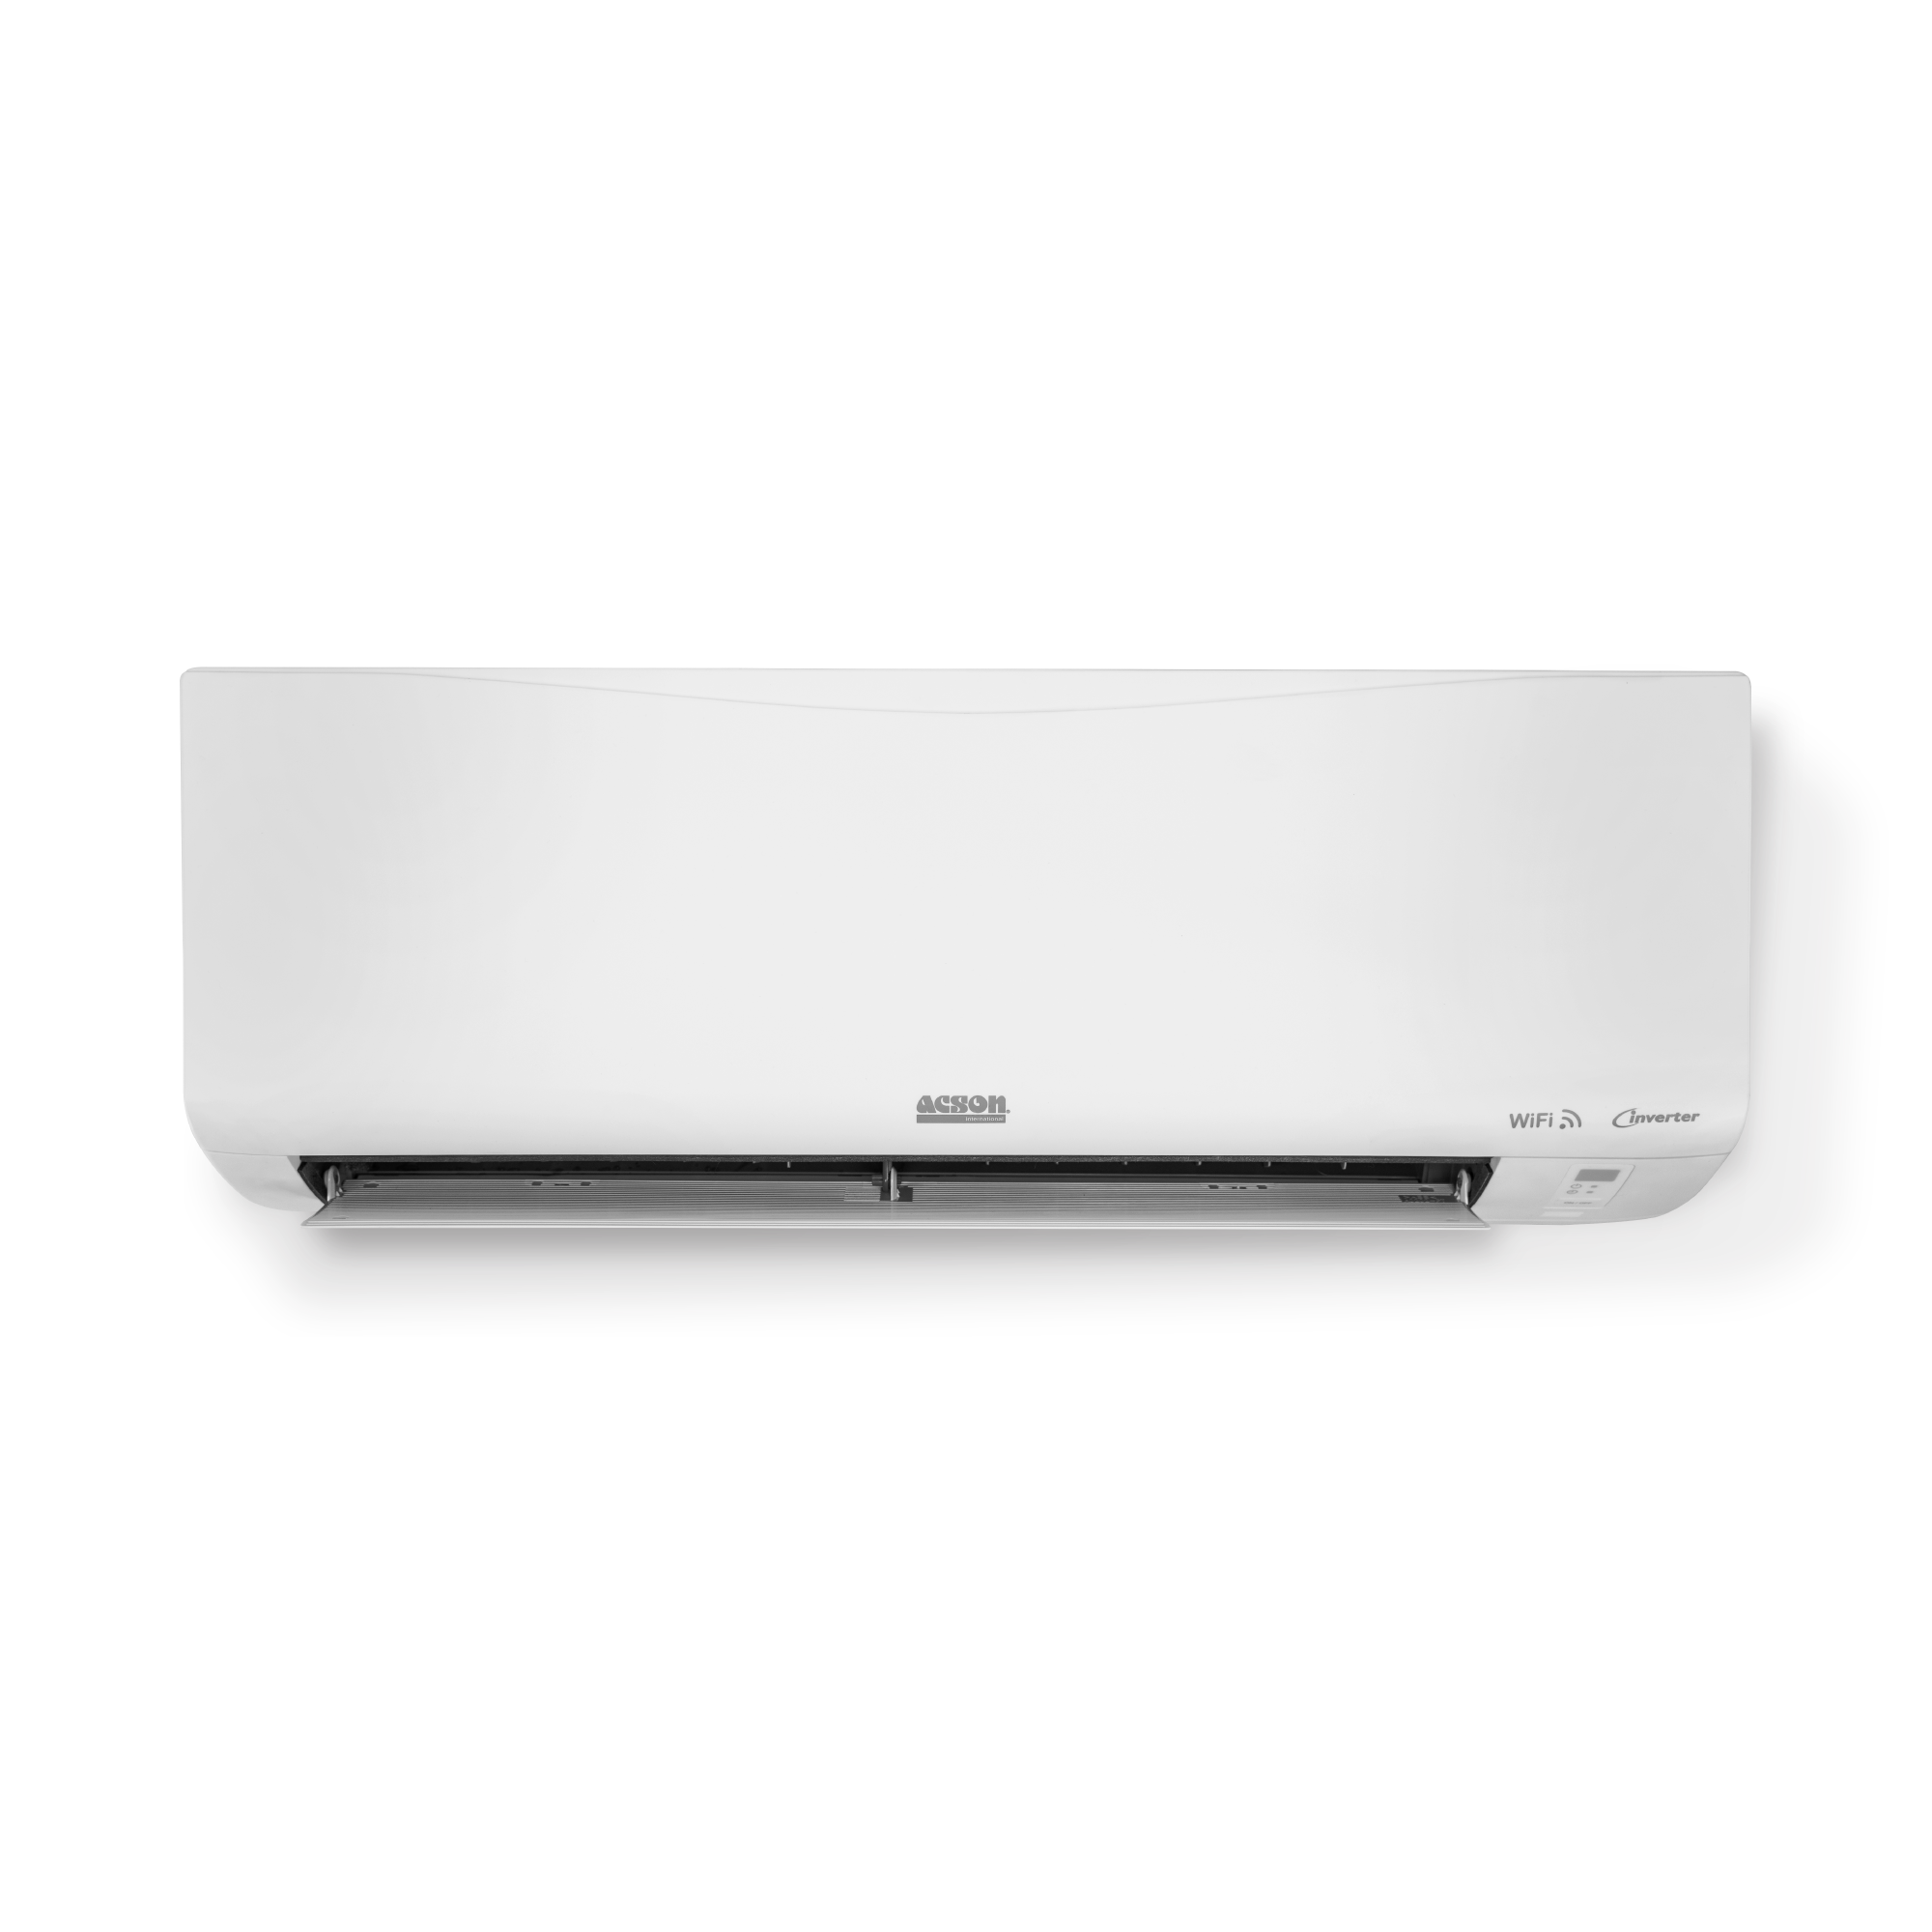 REINO+ Inverter (1.0HP) Air Conditioner R32 WiFi